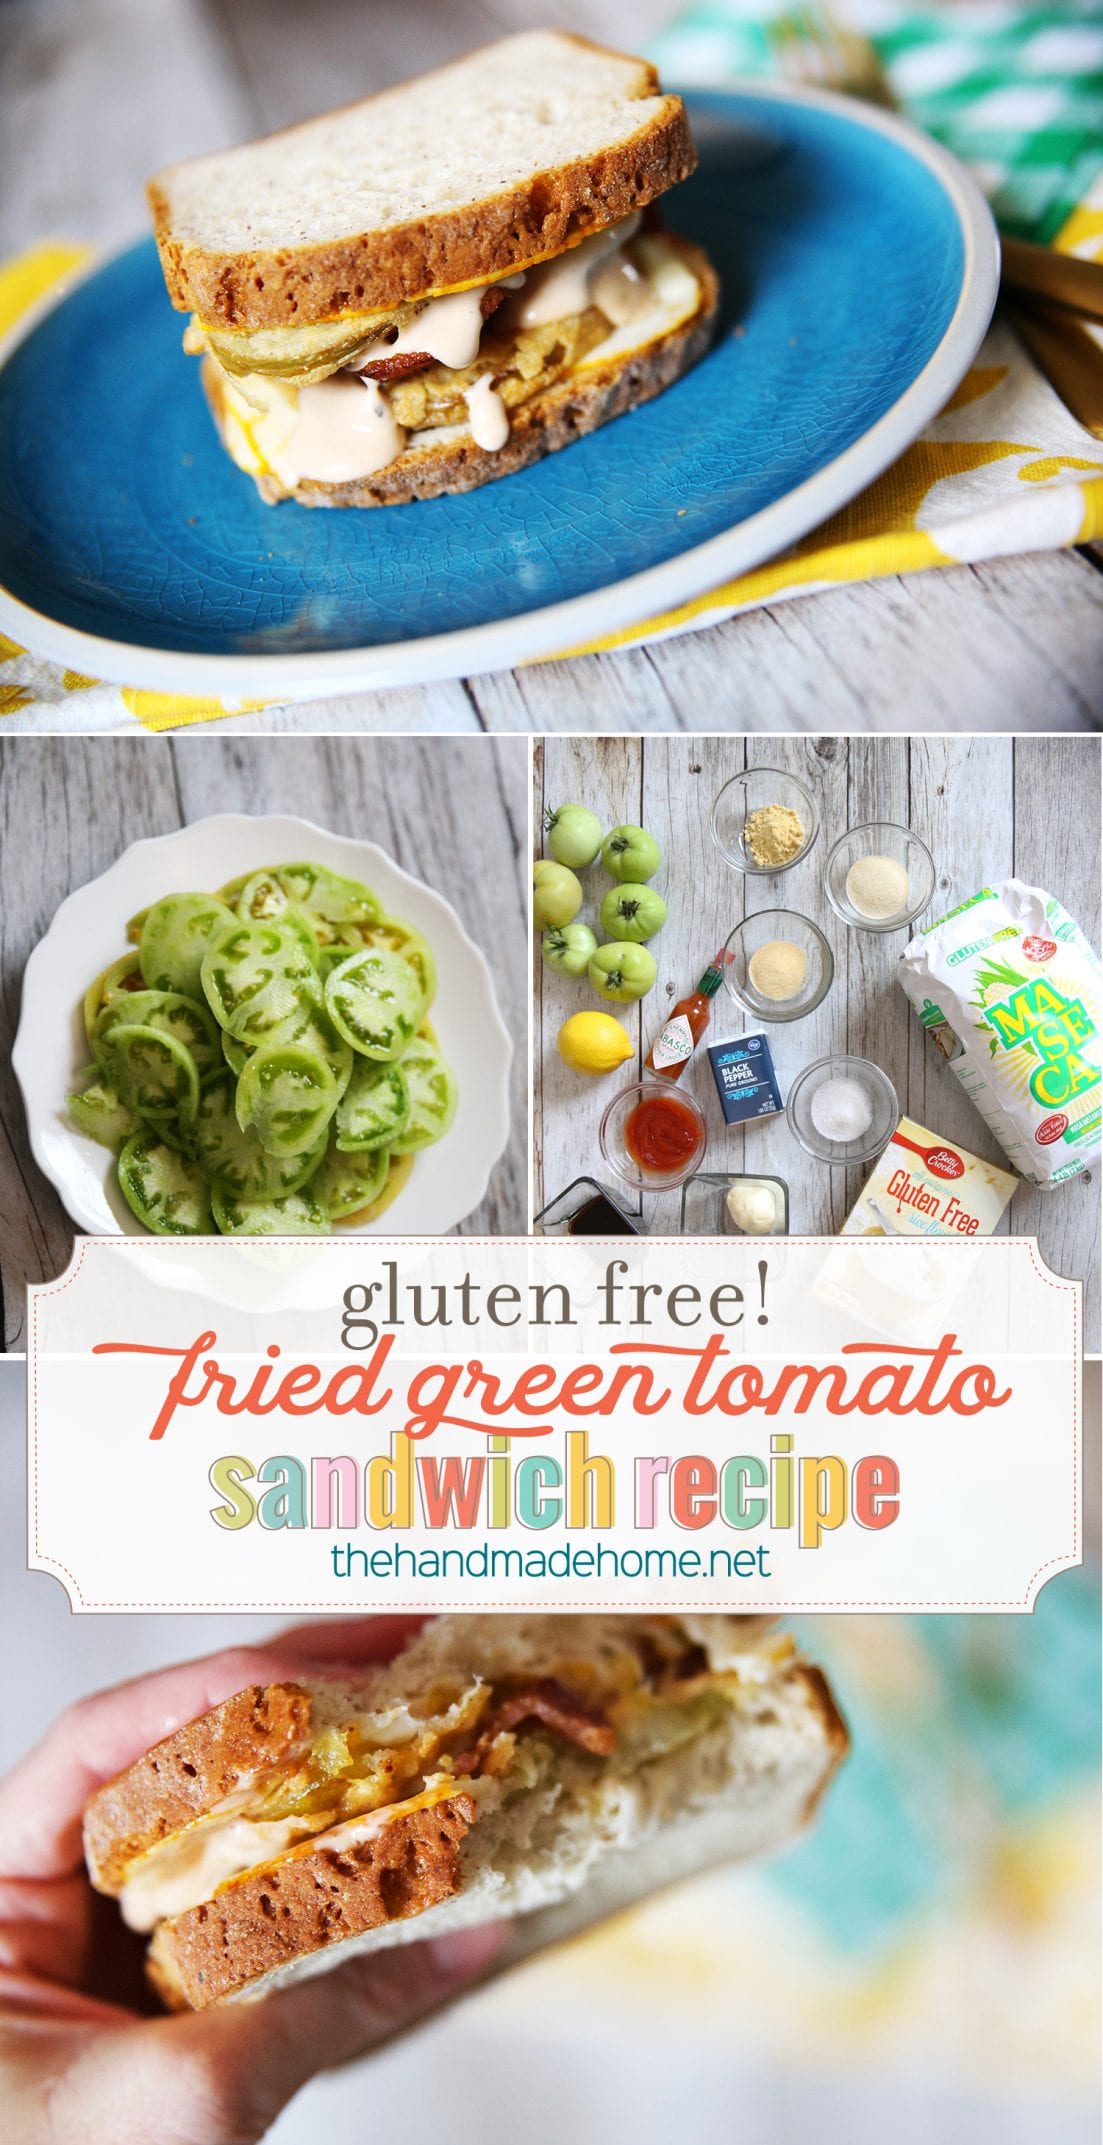 Gluten free sandwich {fried green tomato with comeback sauce} 